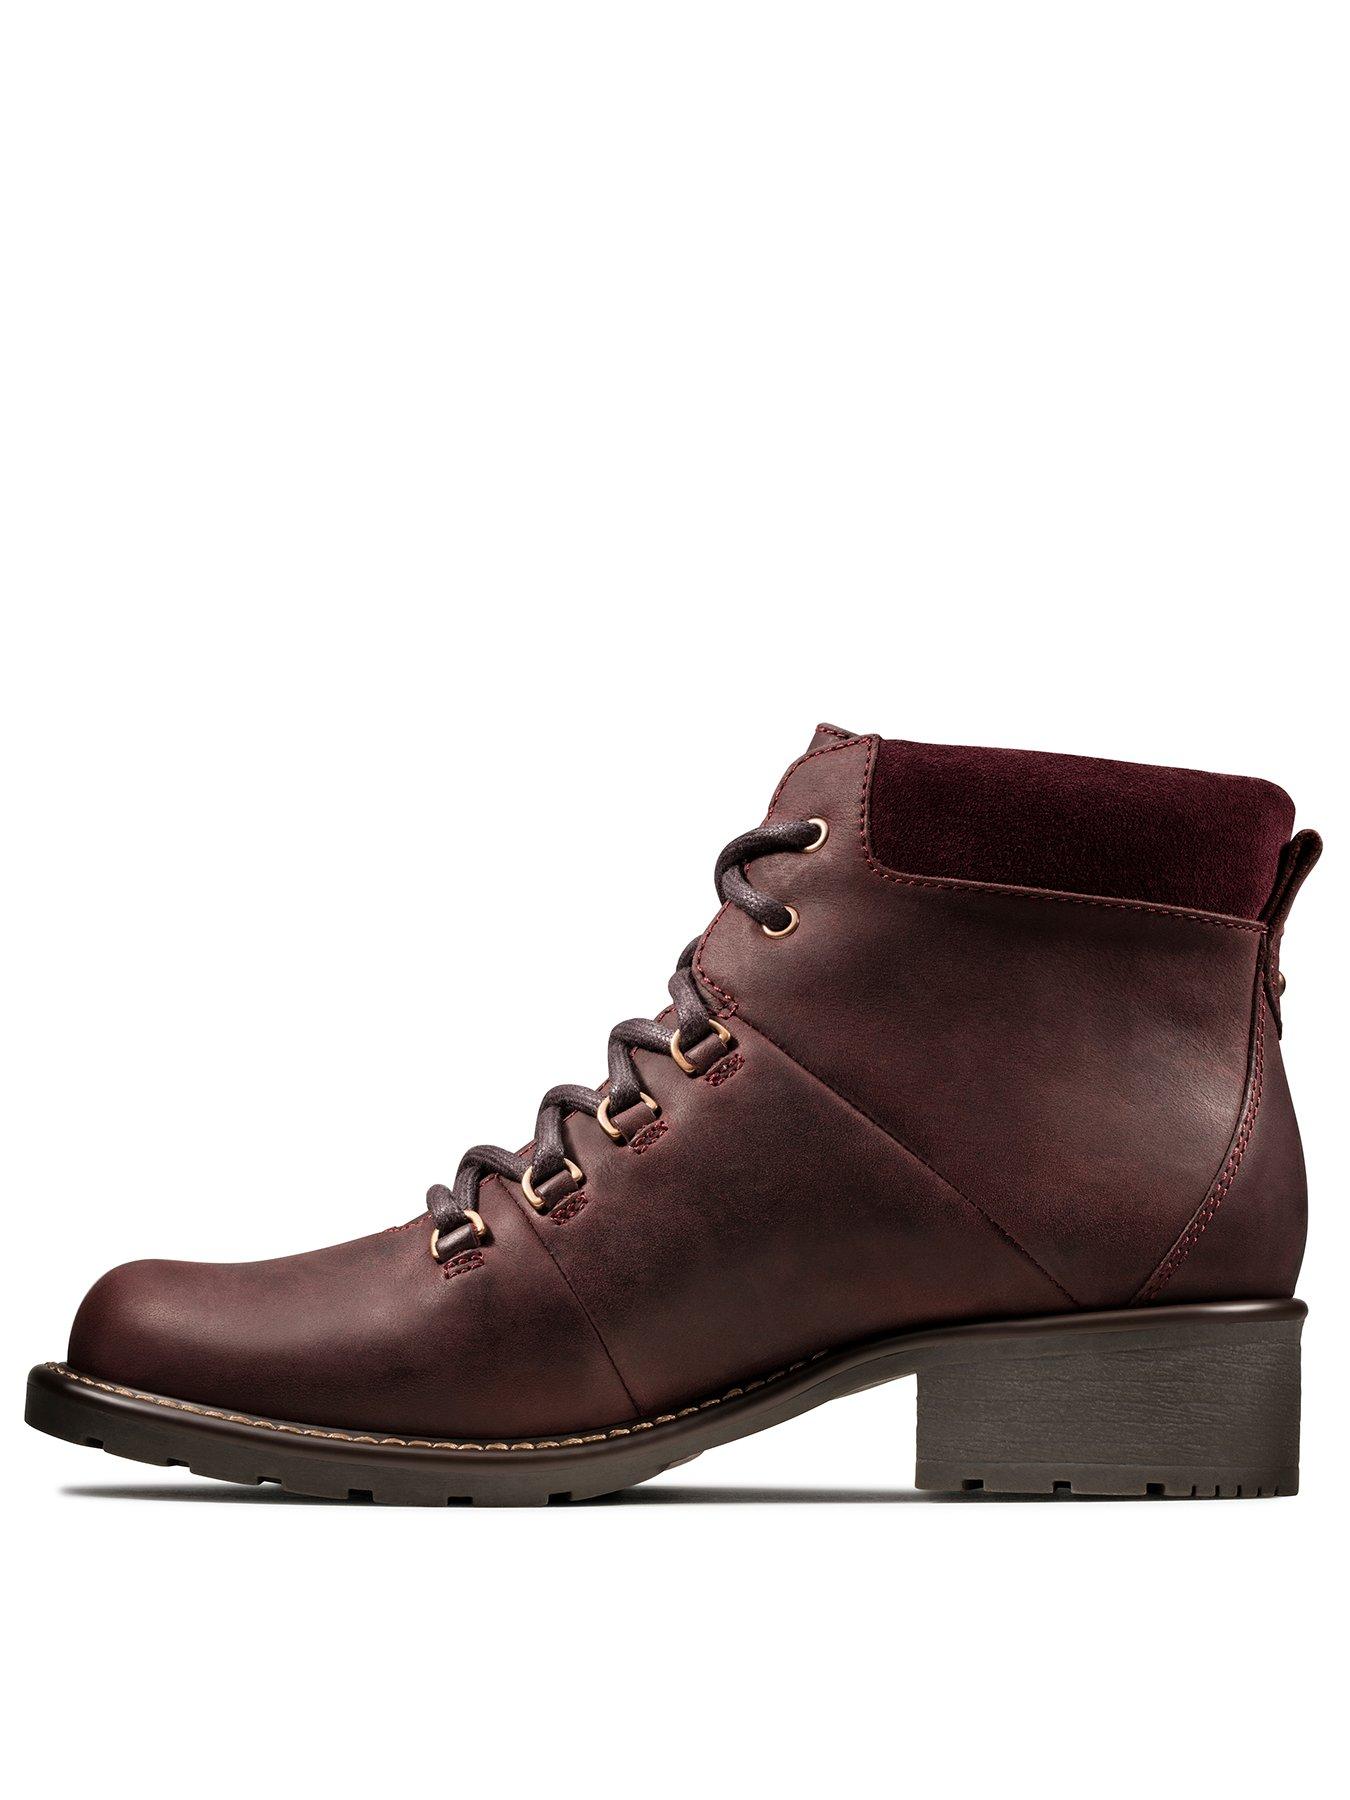 clarks orinoco boots burgundy